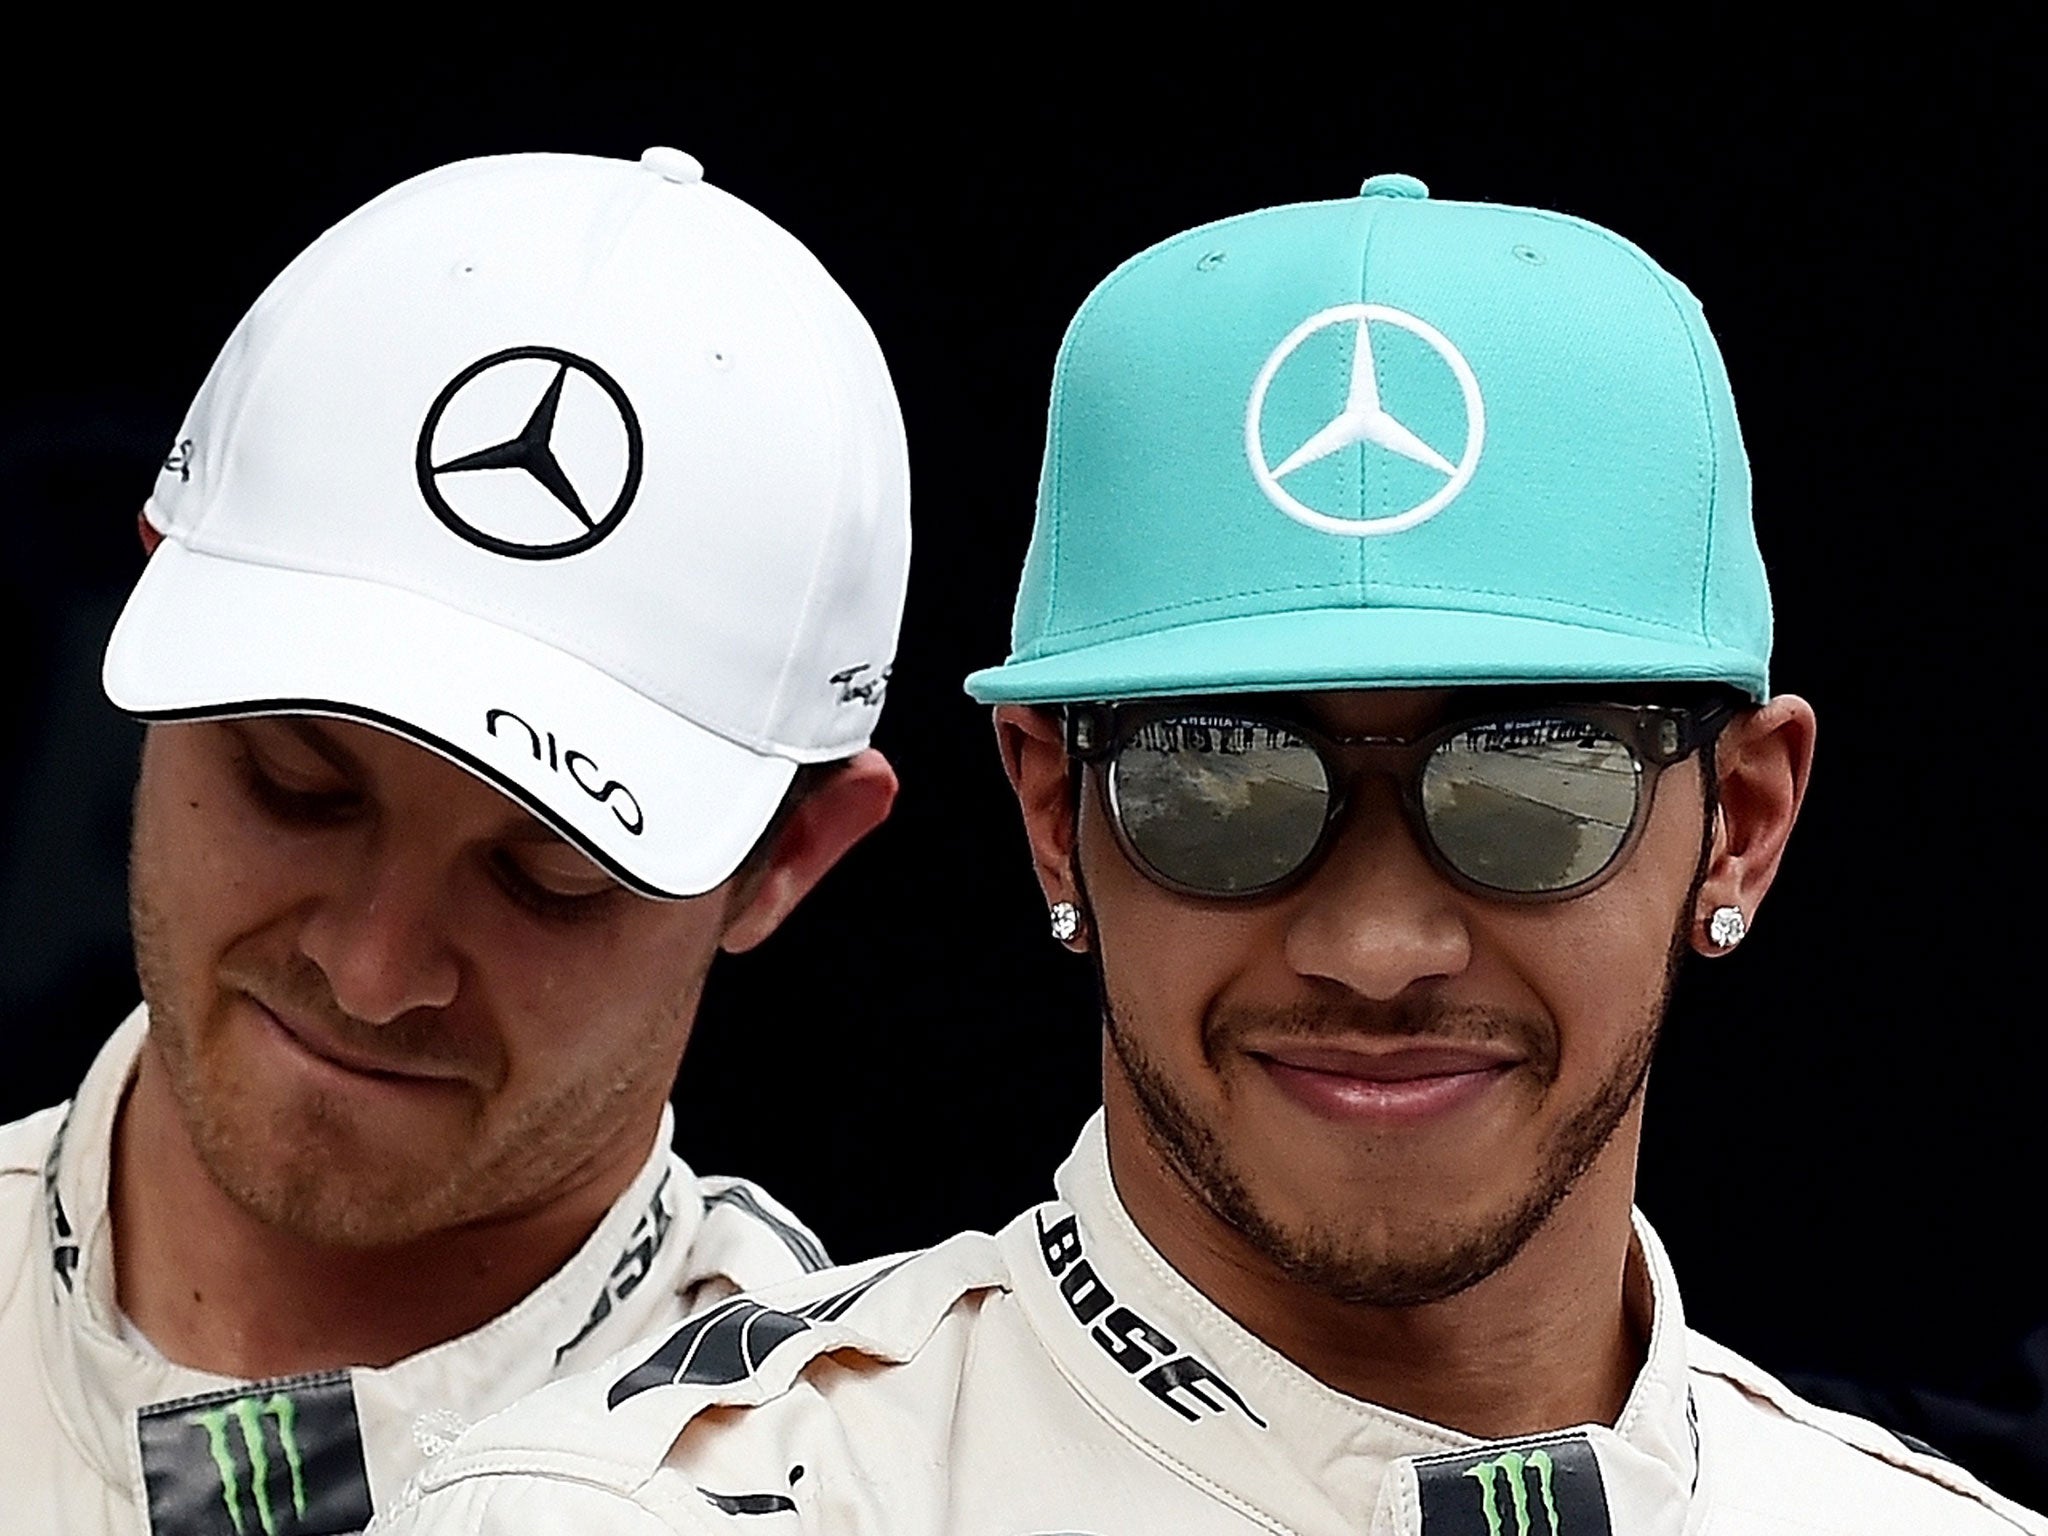 Rosberg grimaces after Hamilton clinches pole